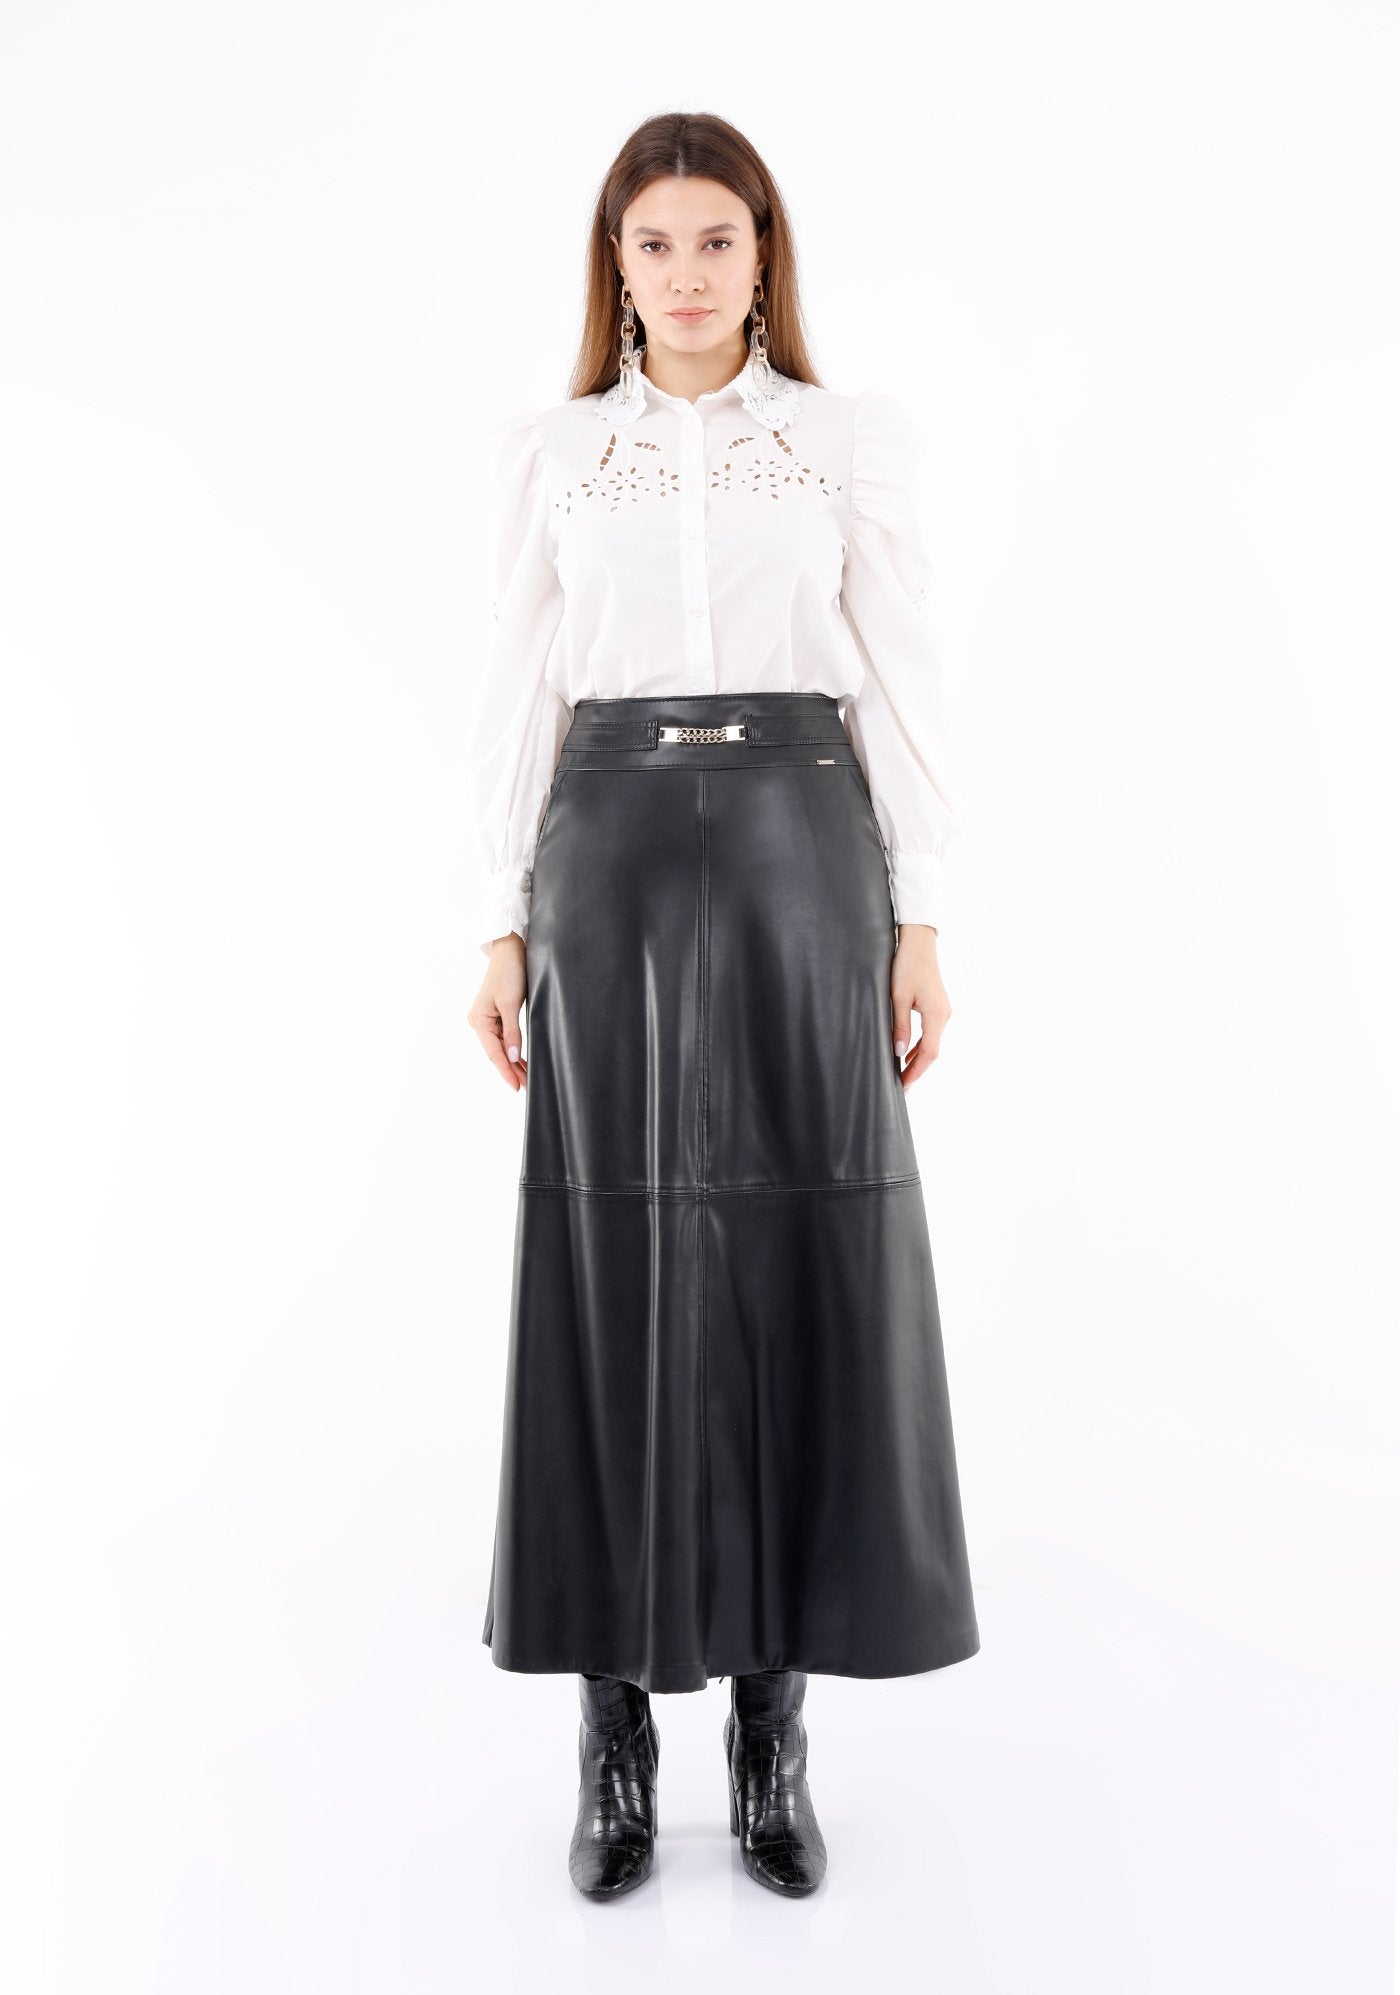 Vegan Leather Maxi Black Skirt with Pockets and Metal Accessories Around Waist Guzella